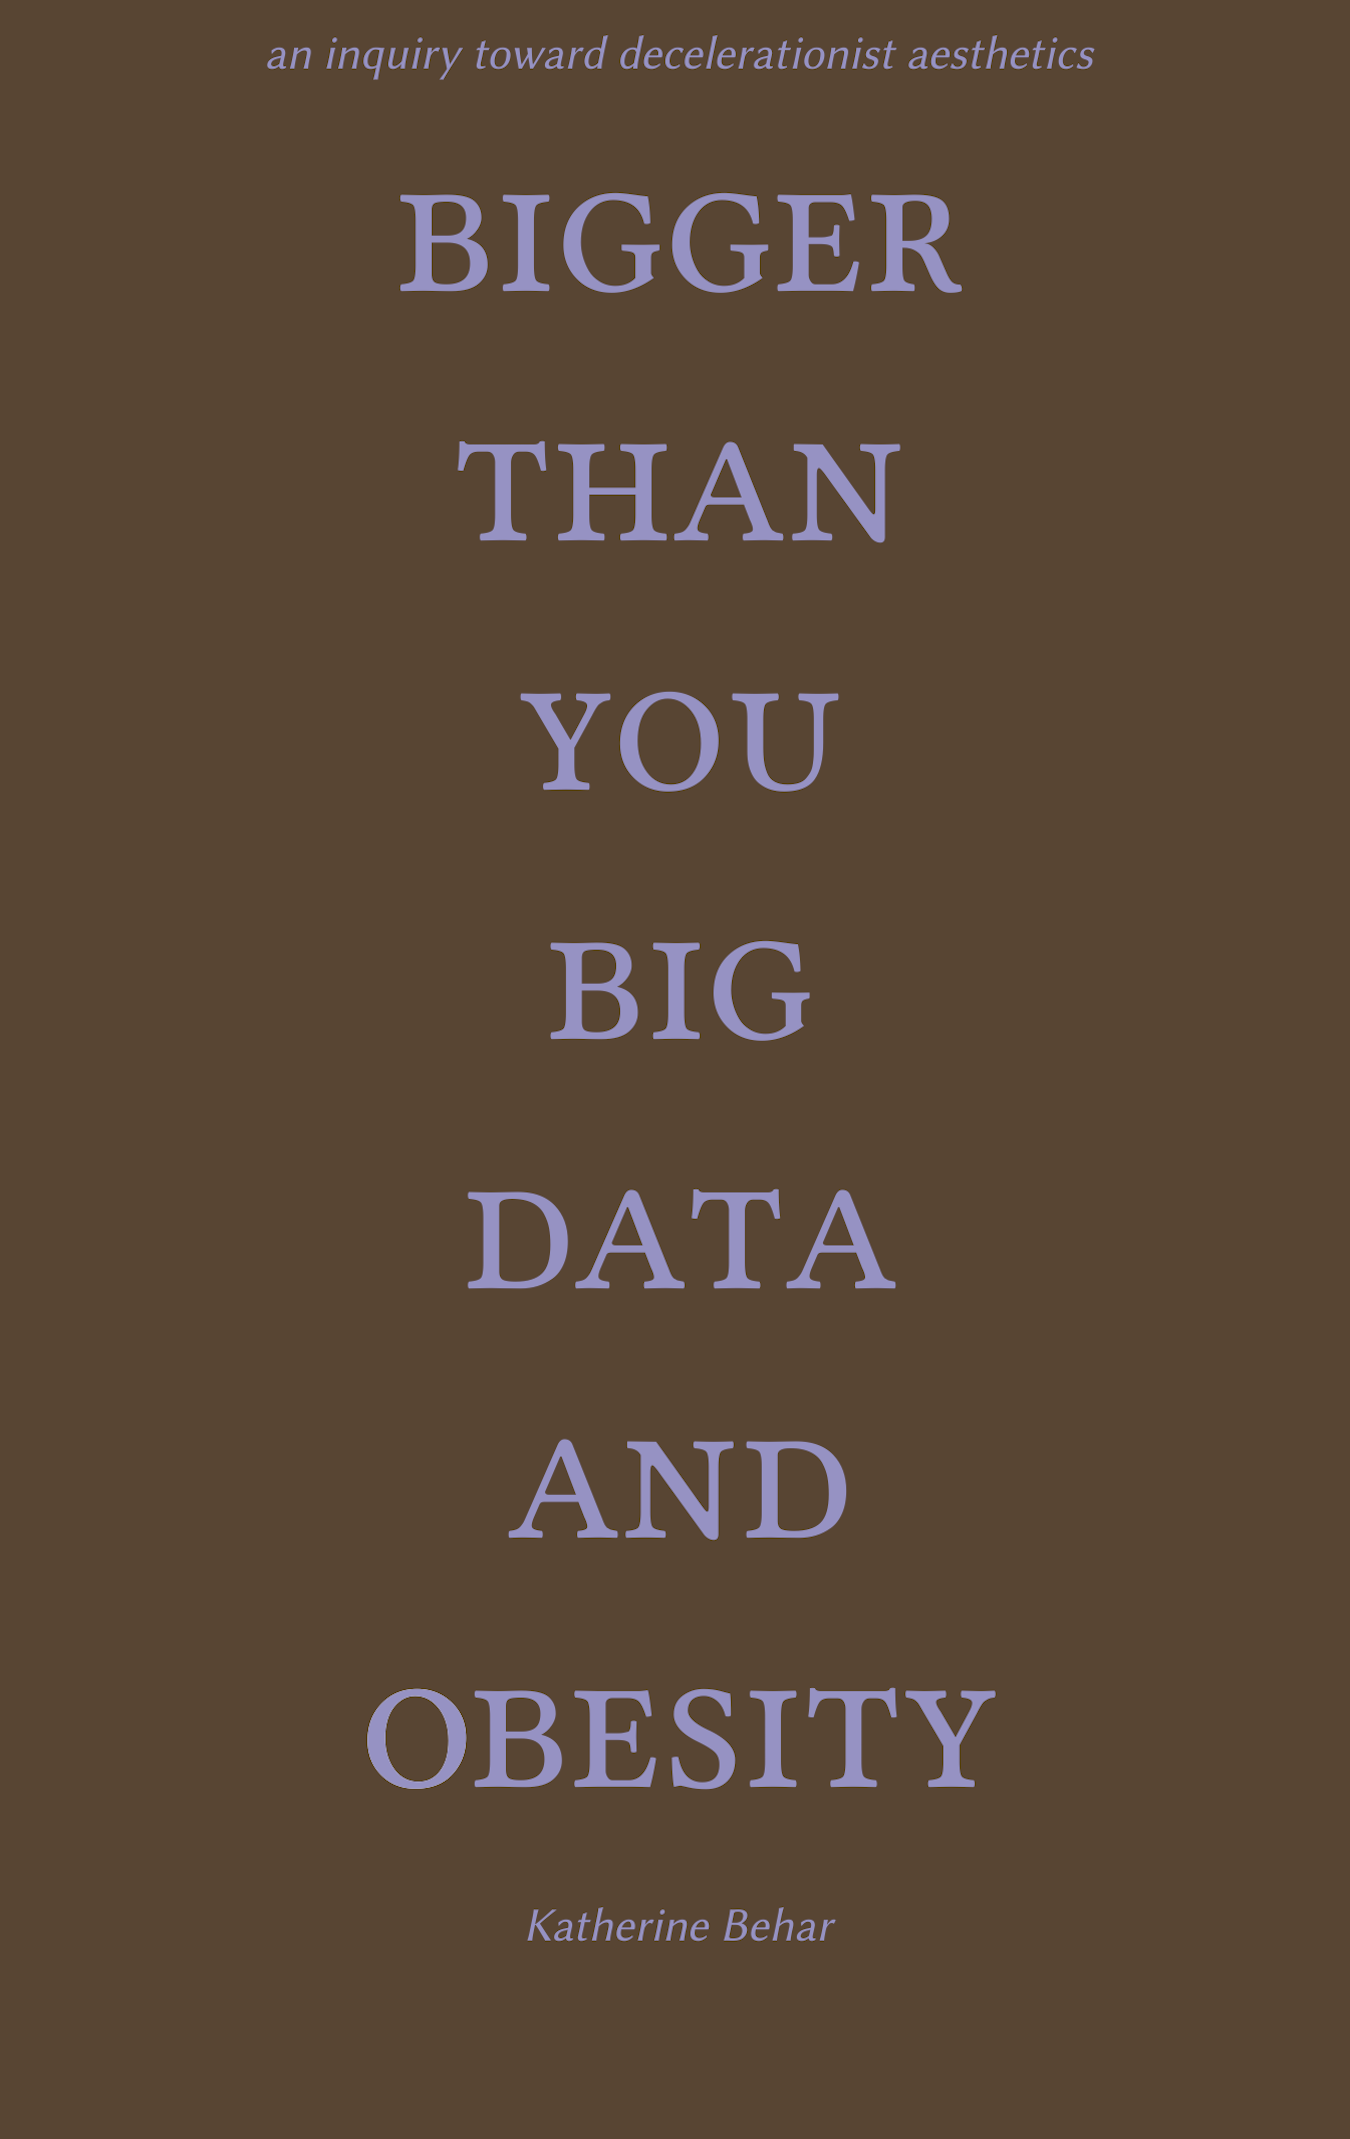 Bigger Than You: Big Data and Obesity (punctum books, 2016)